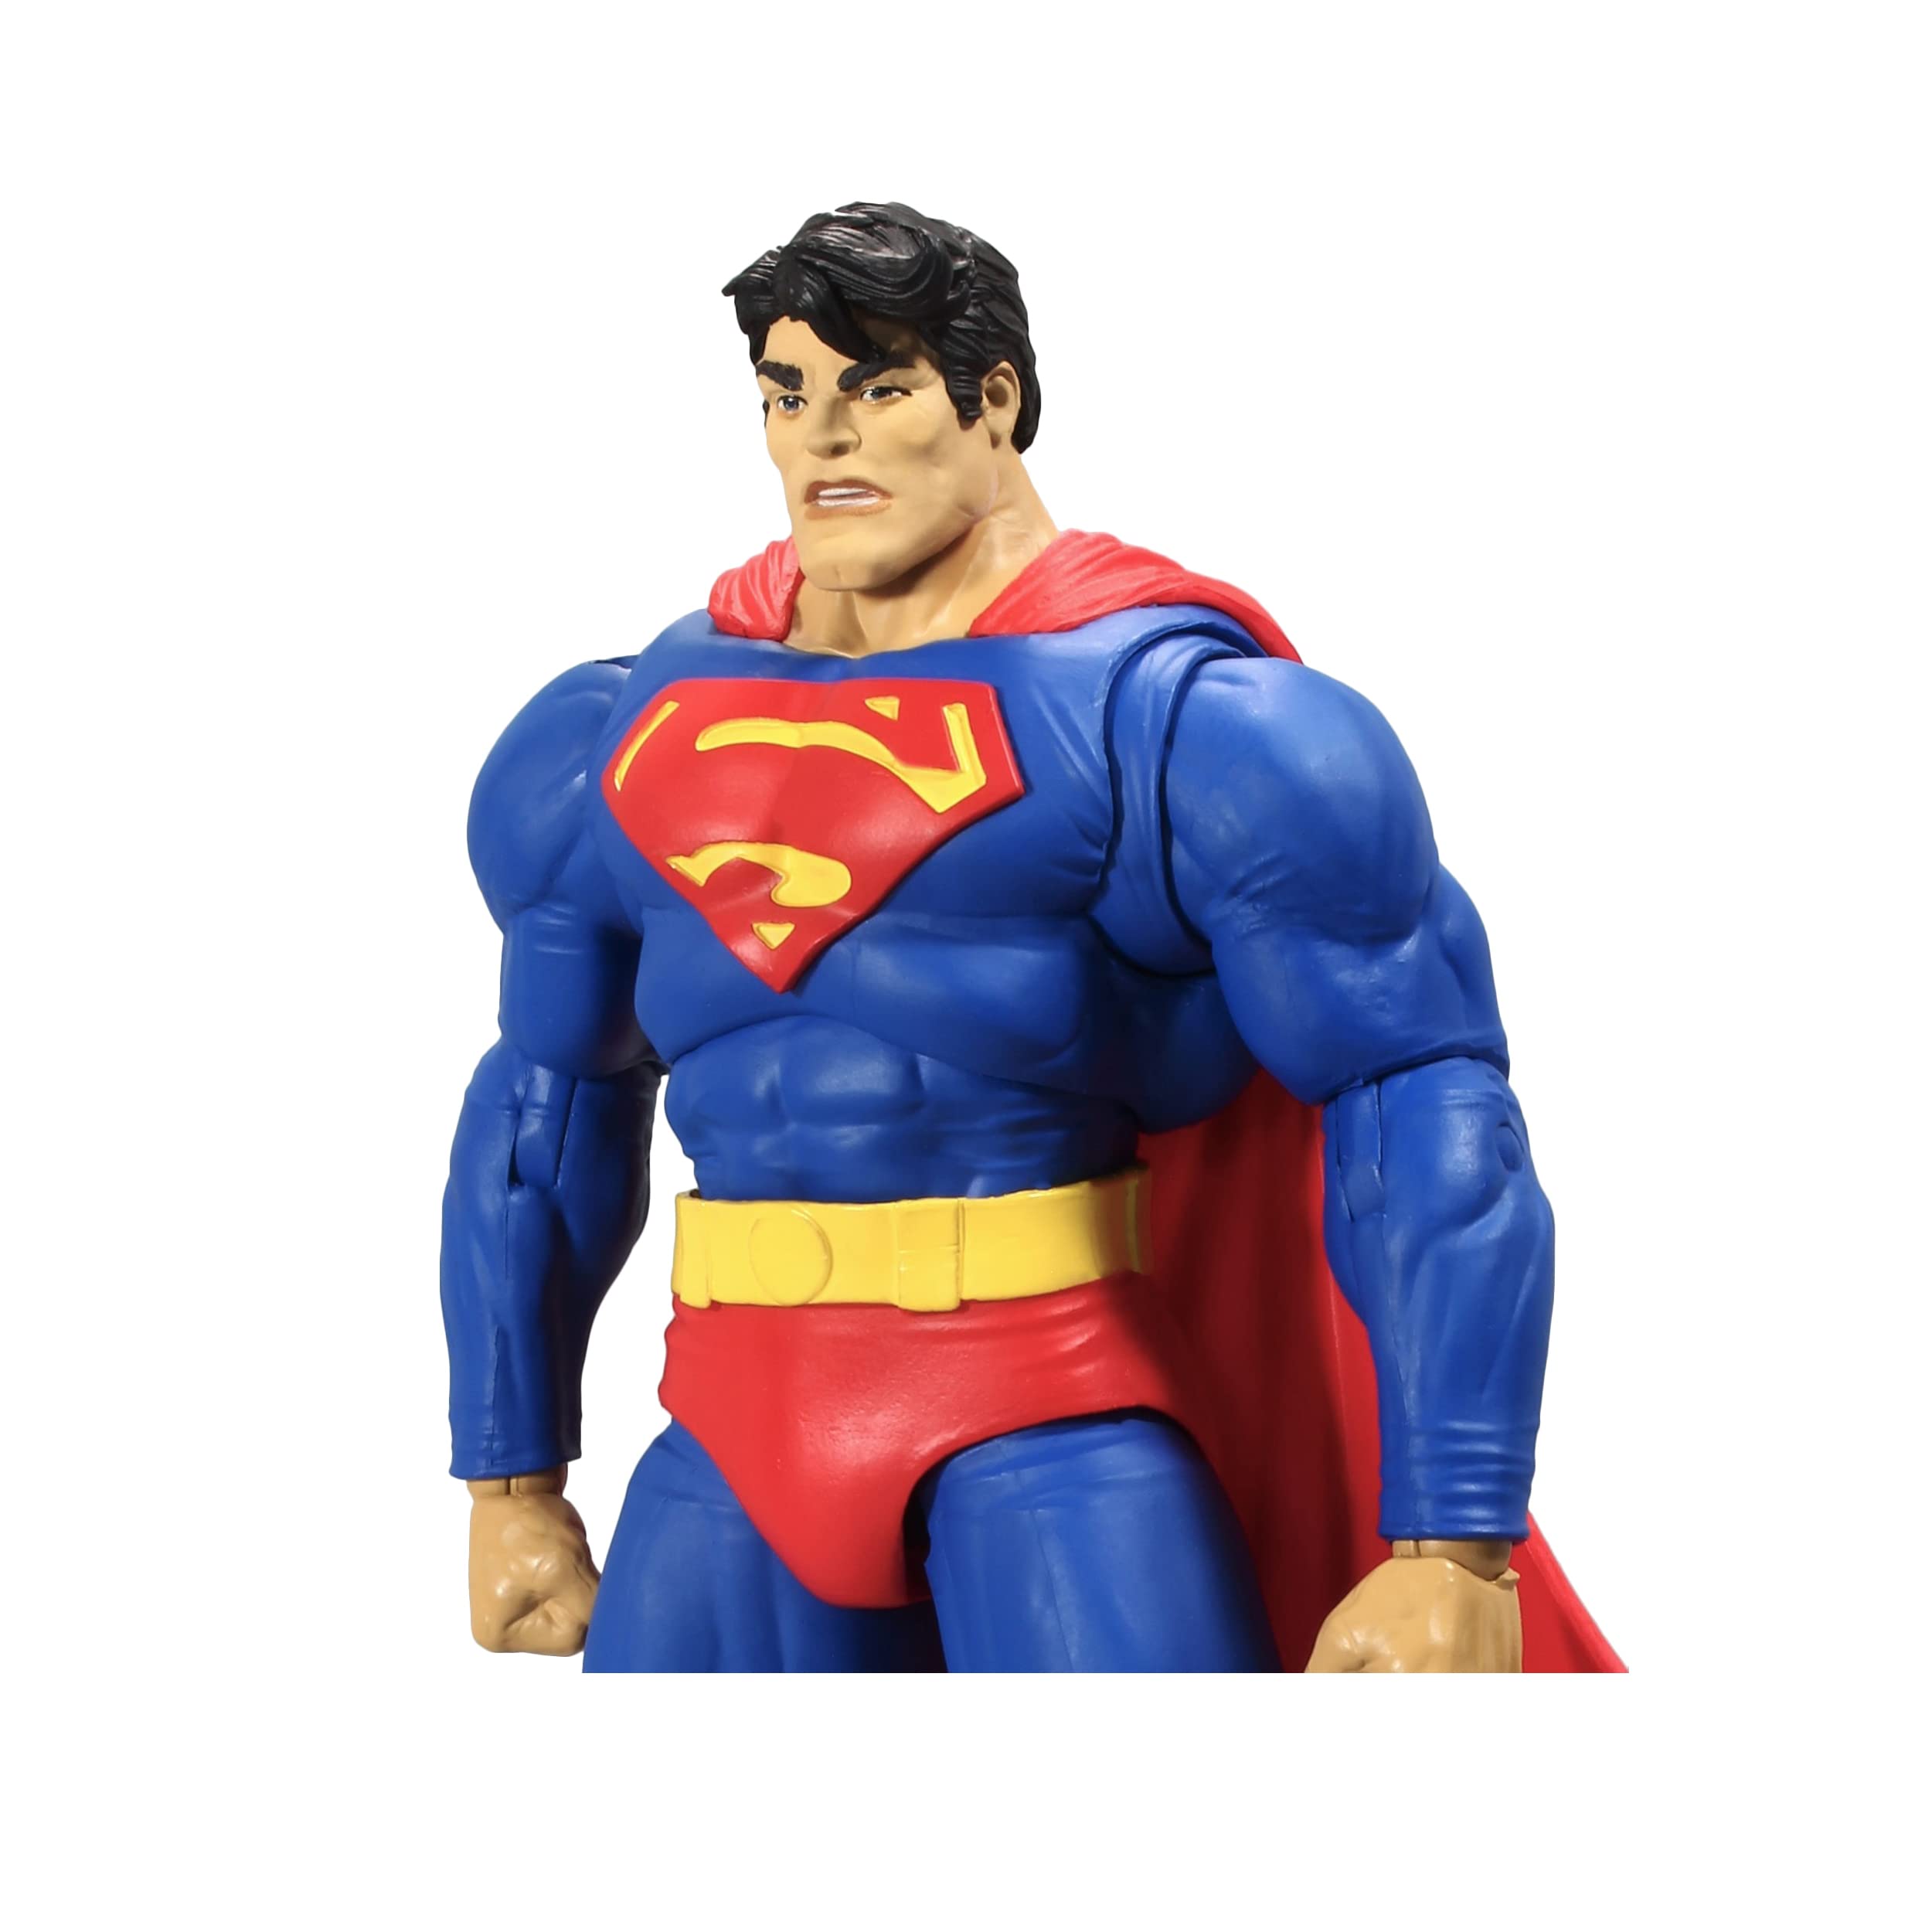 McFarlane Toys DC Multiverse The Dark Knight Returns Superman 7